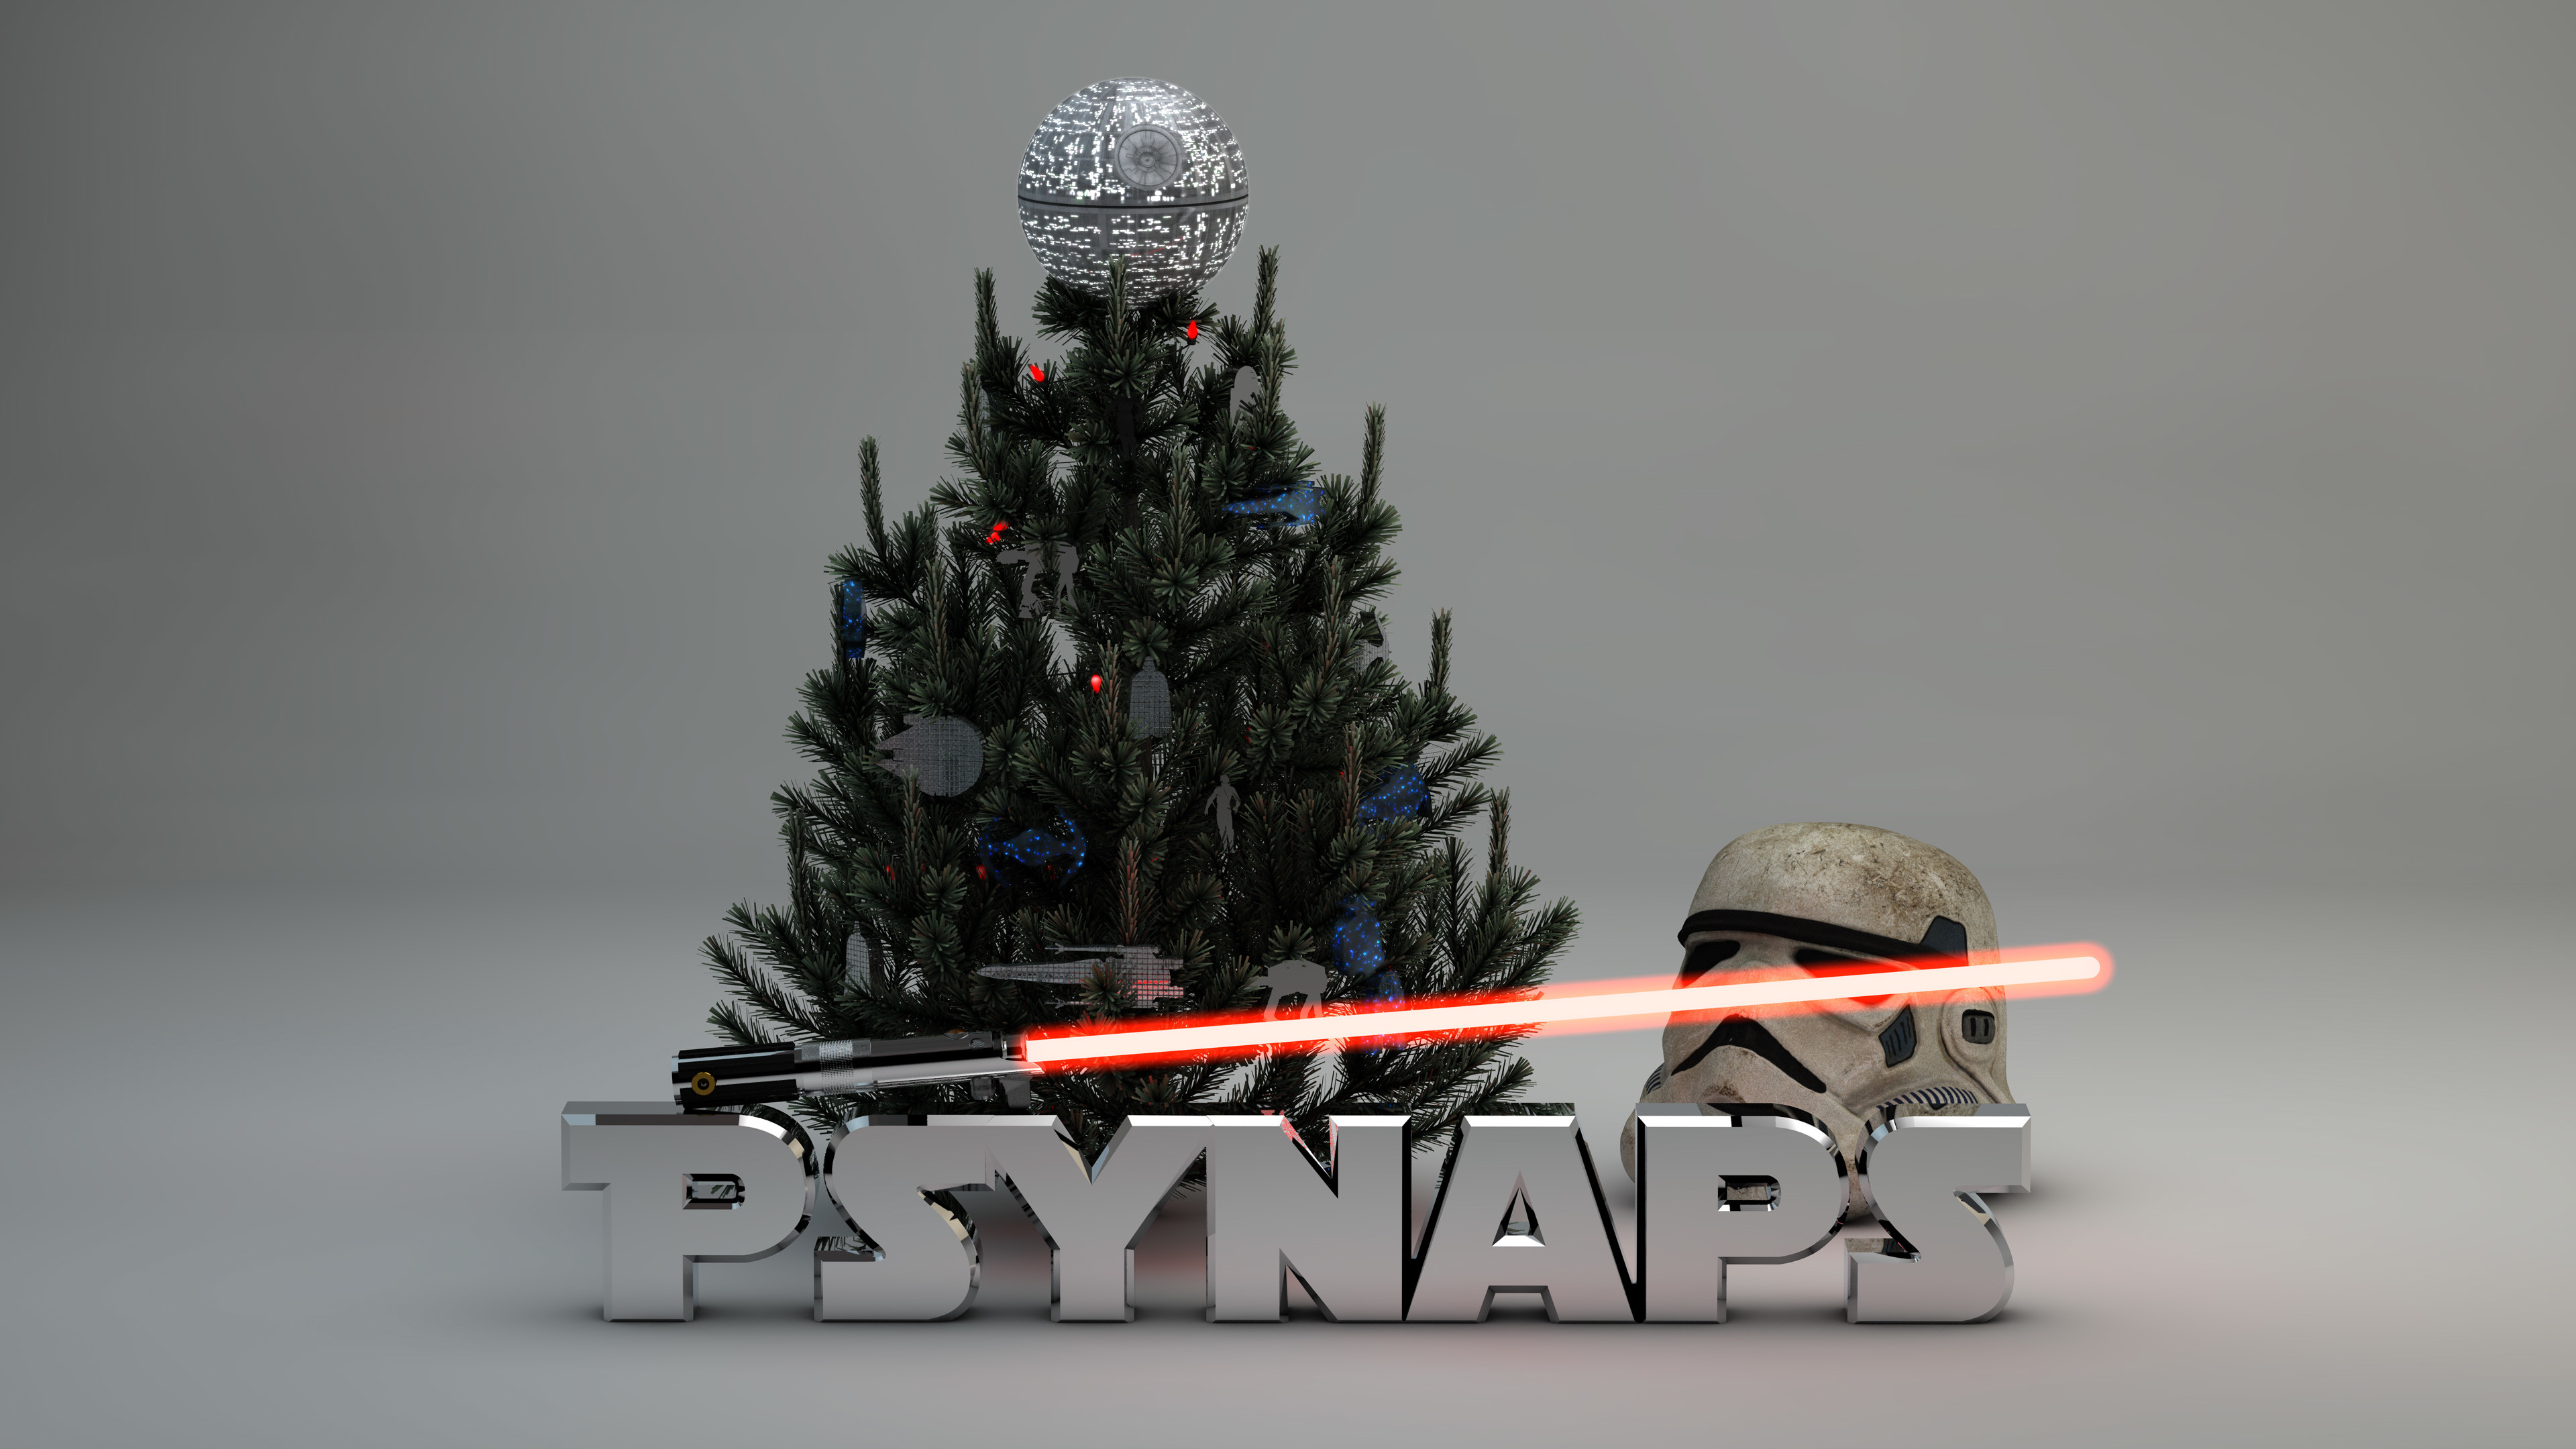 3840x2160 ... Star Wars Christmas Tree 4K Custom Wallpaper.  Psynaps_Adobe_StarWars_Theme_Tree_Psynaps0006